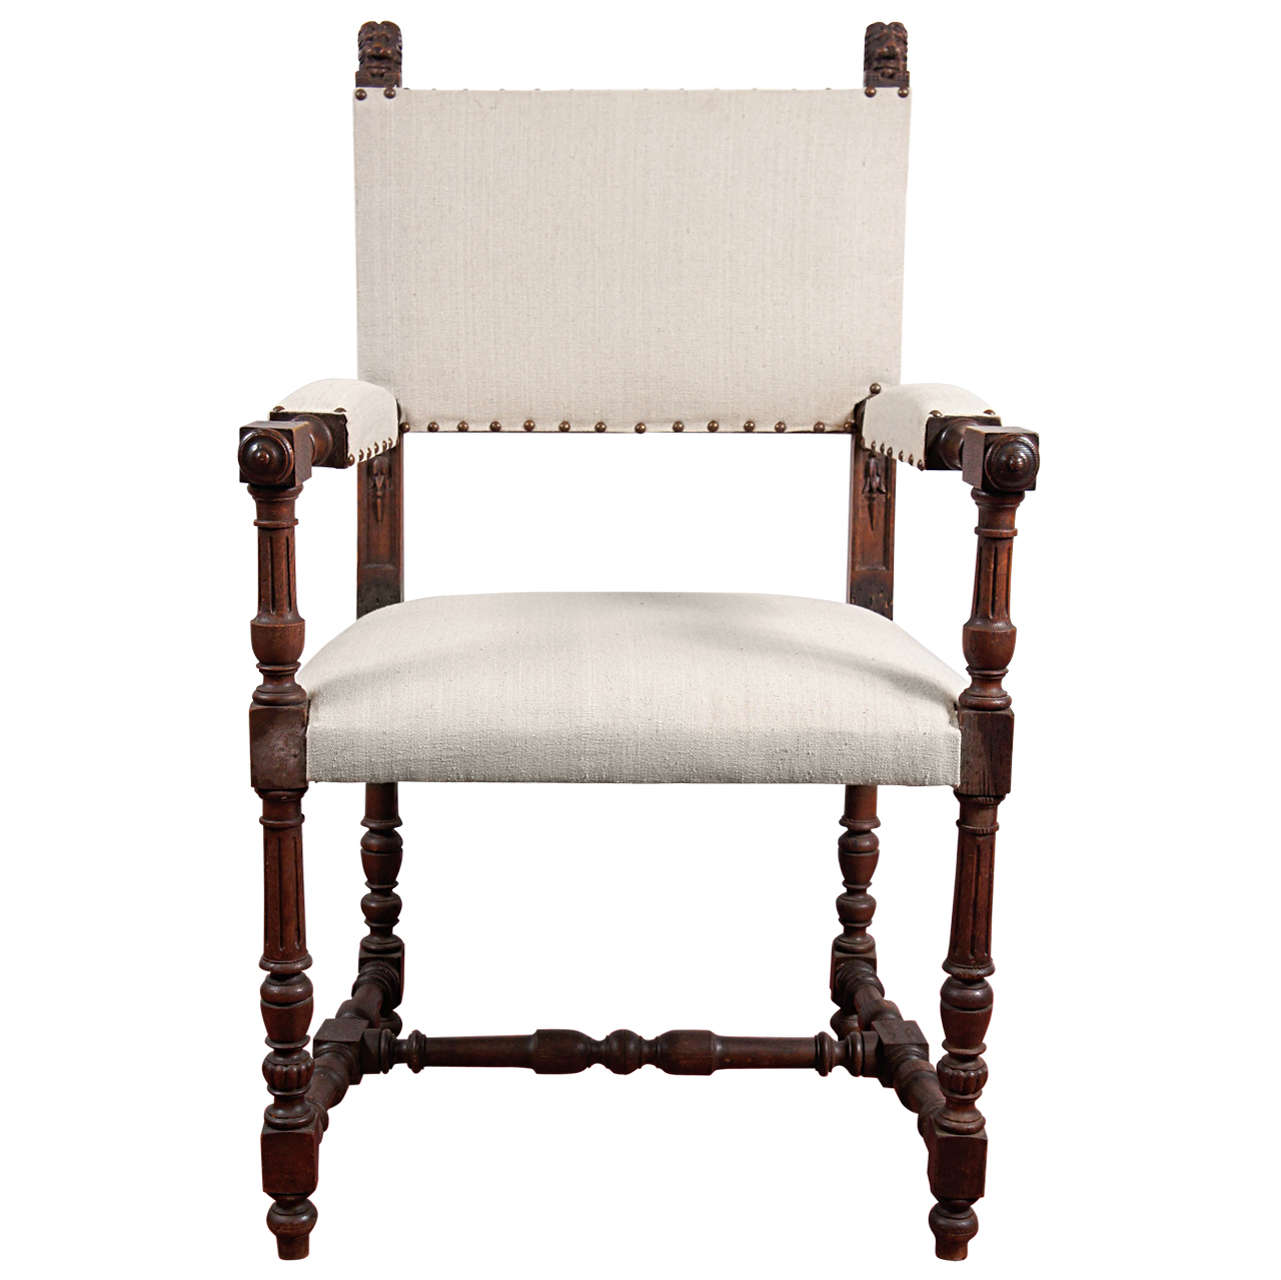 Spanish-Renaissance-Style Armchair